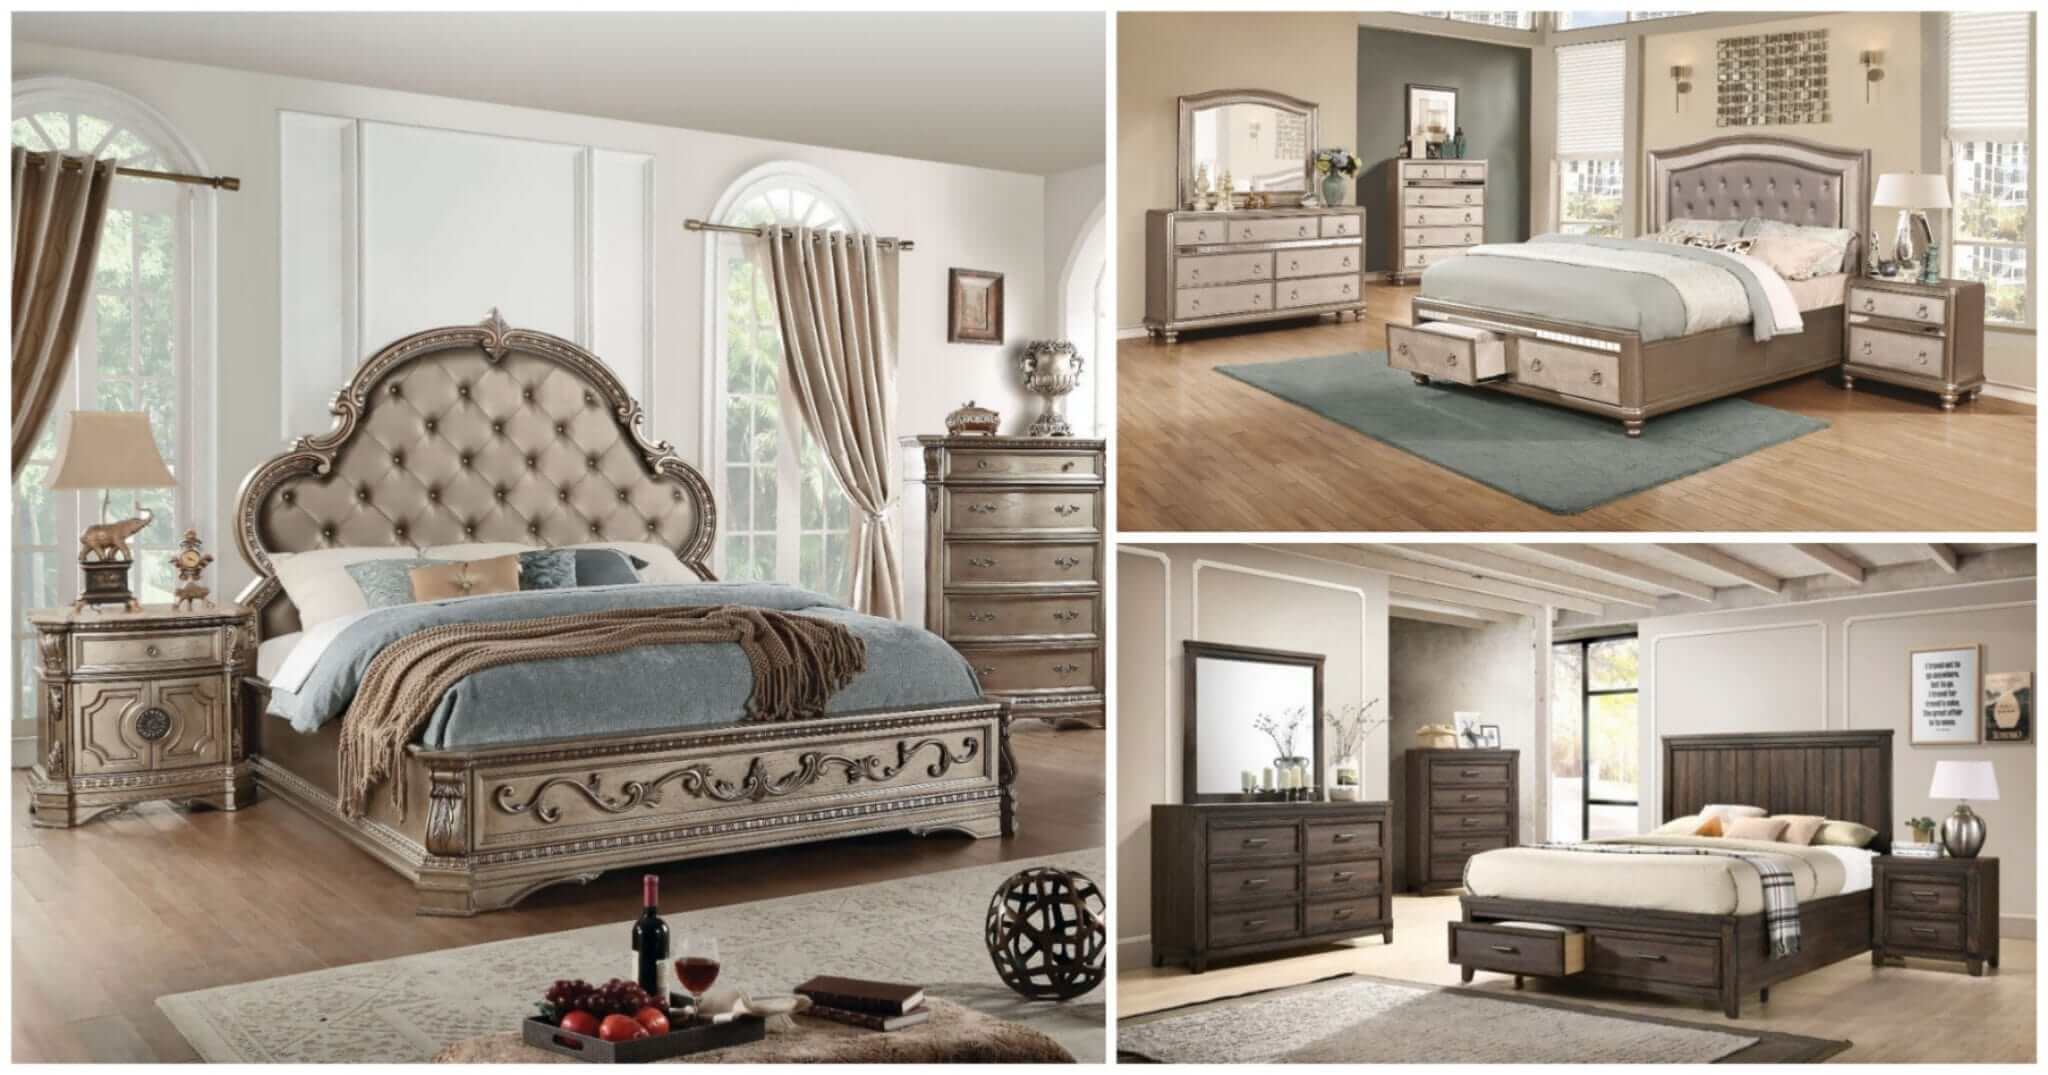 King Size Bed | Dresser | Bedroom | Double Bed | Bedside Table